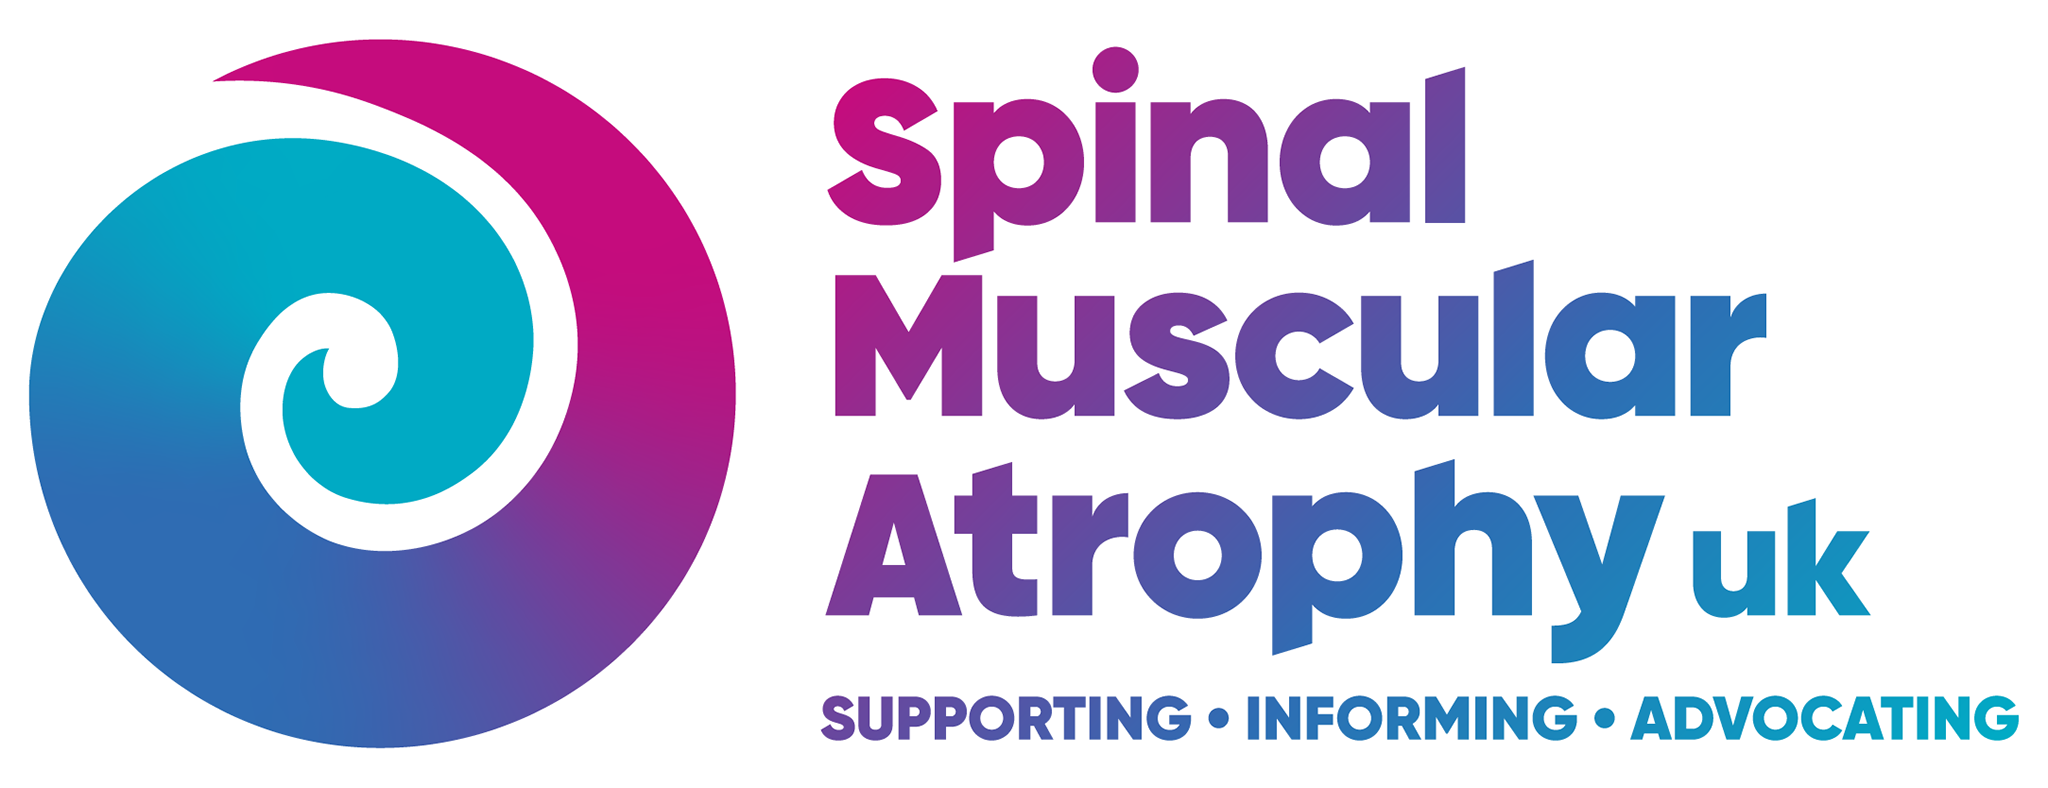 Spinal Muscular Atrophy UK